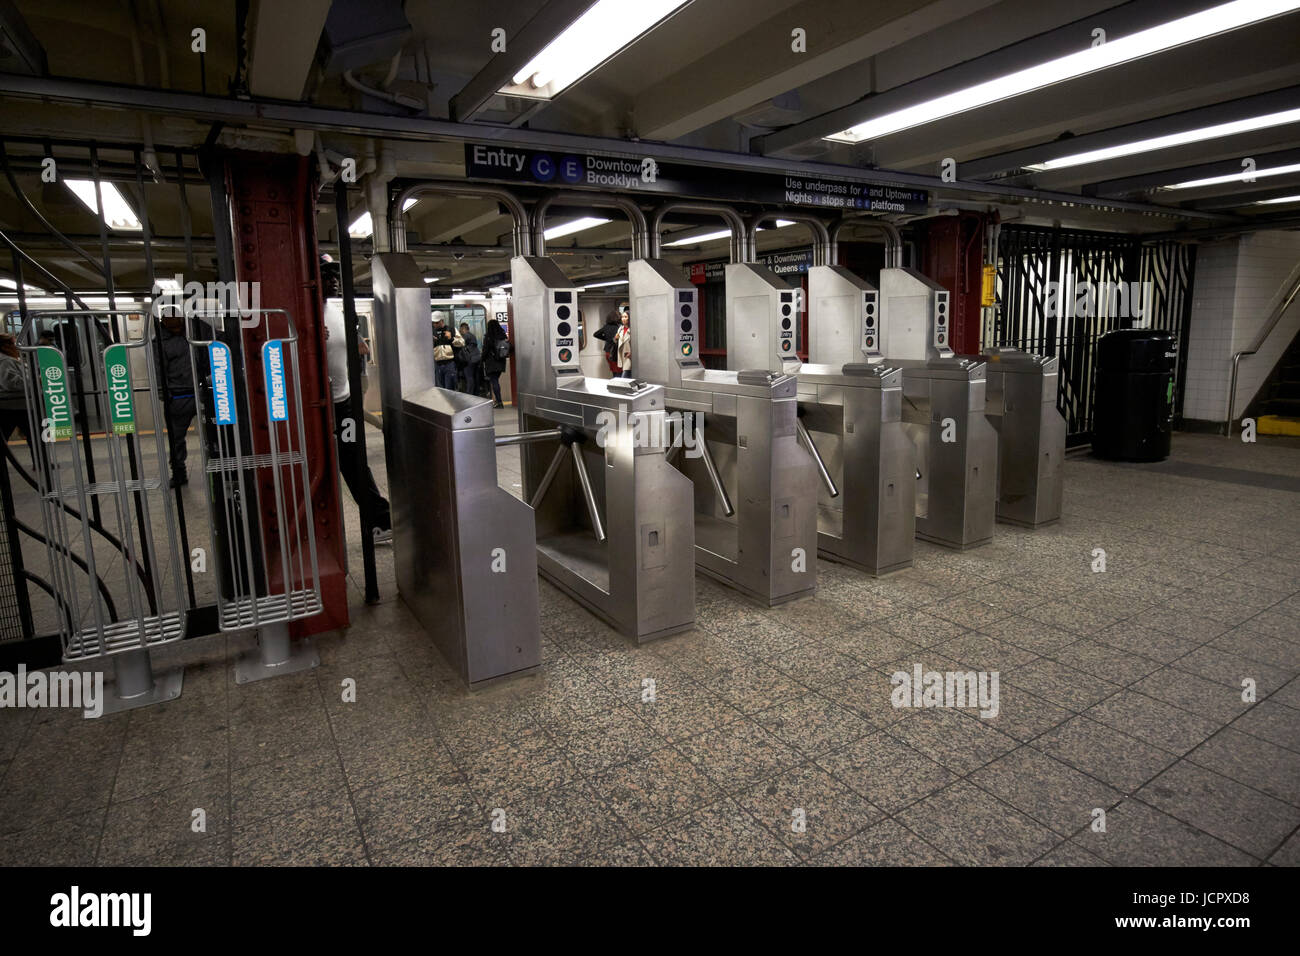 entrance gates at subway station platform New York City USA Stock Photo